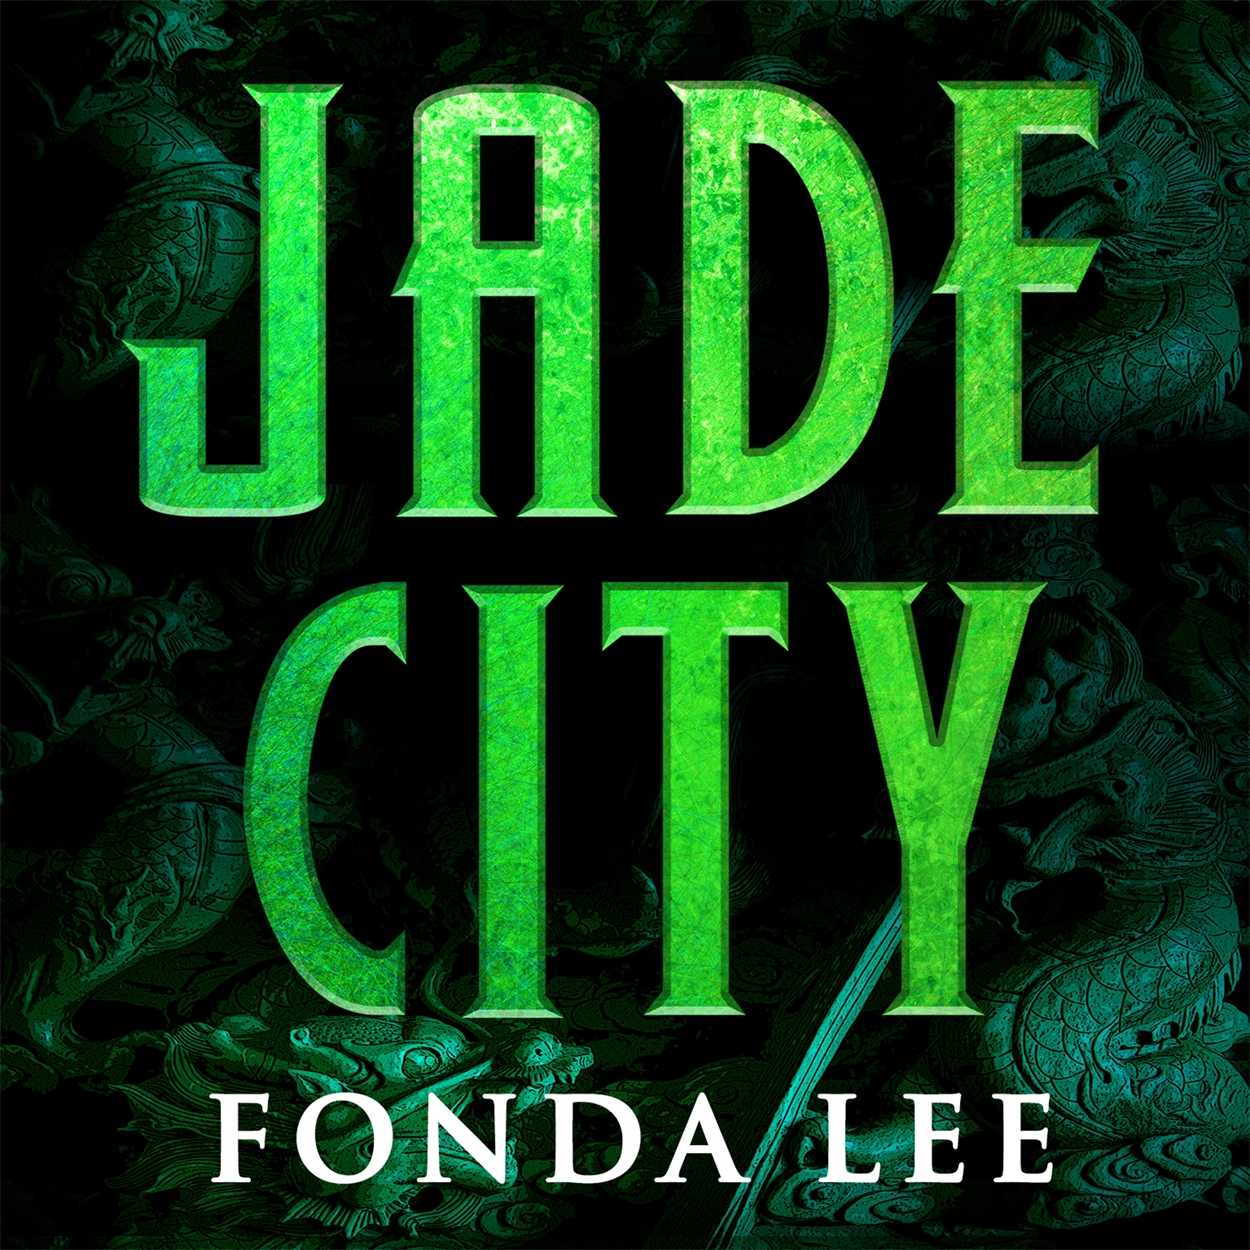 jade city by fonda lee